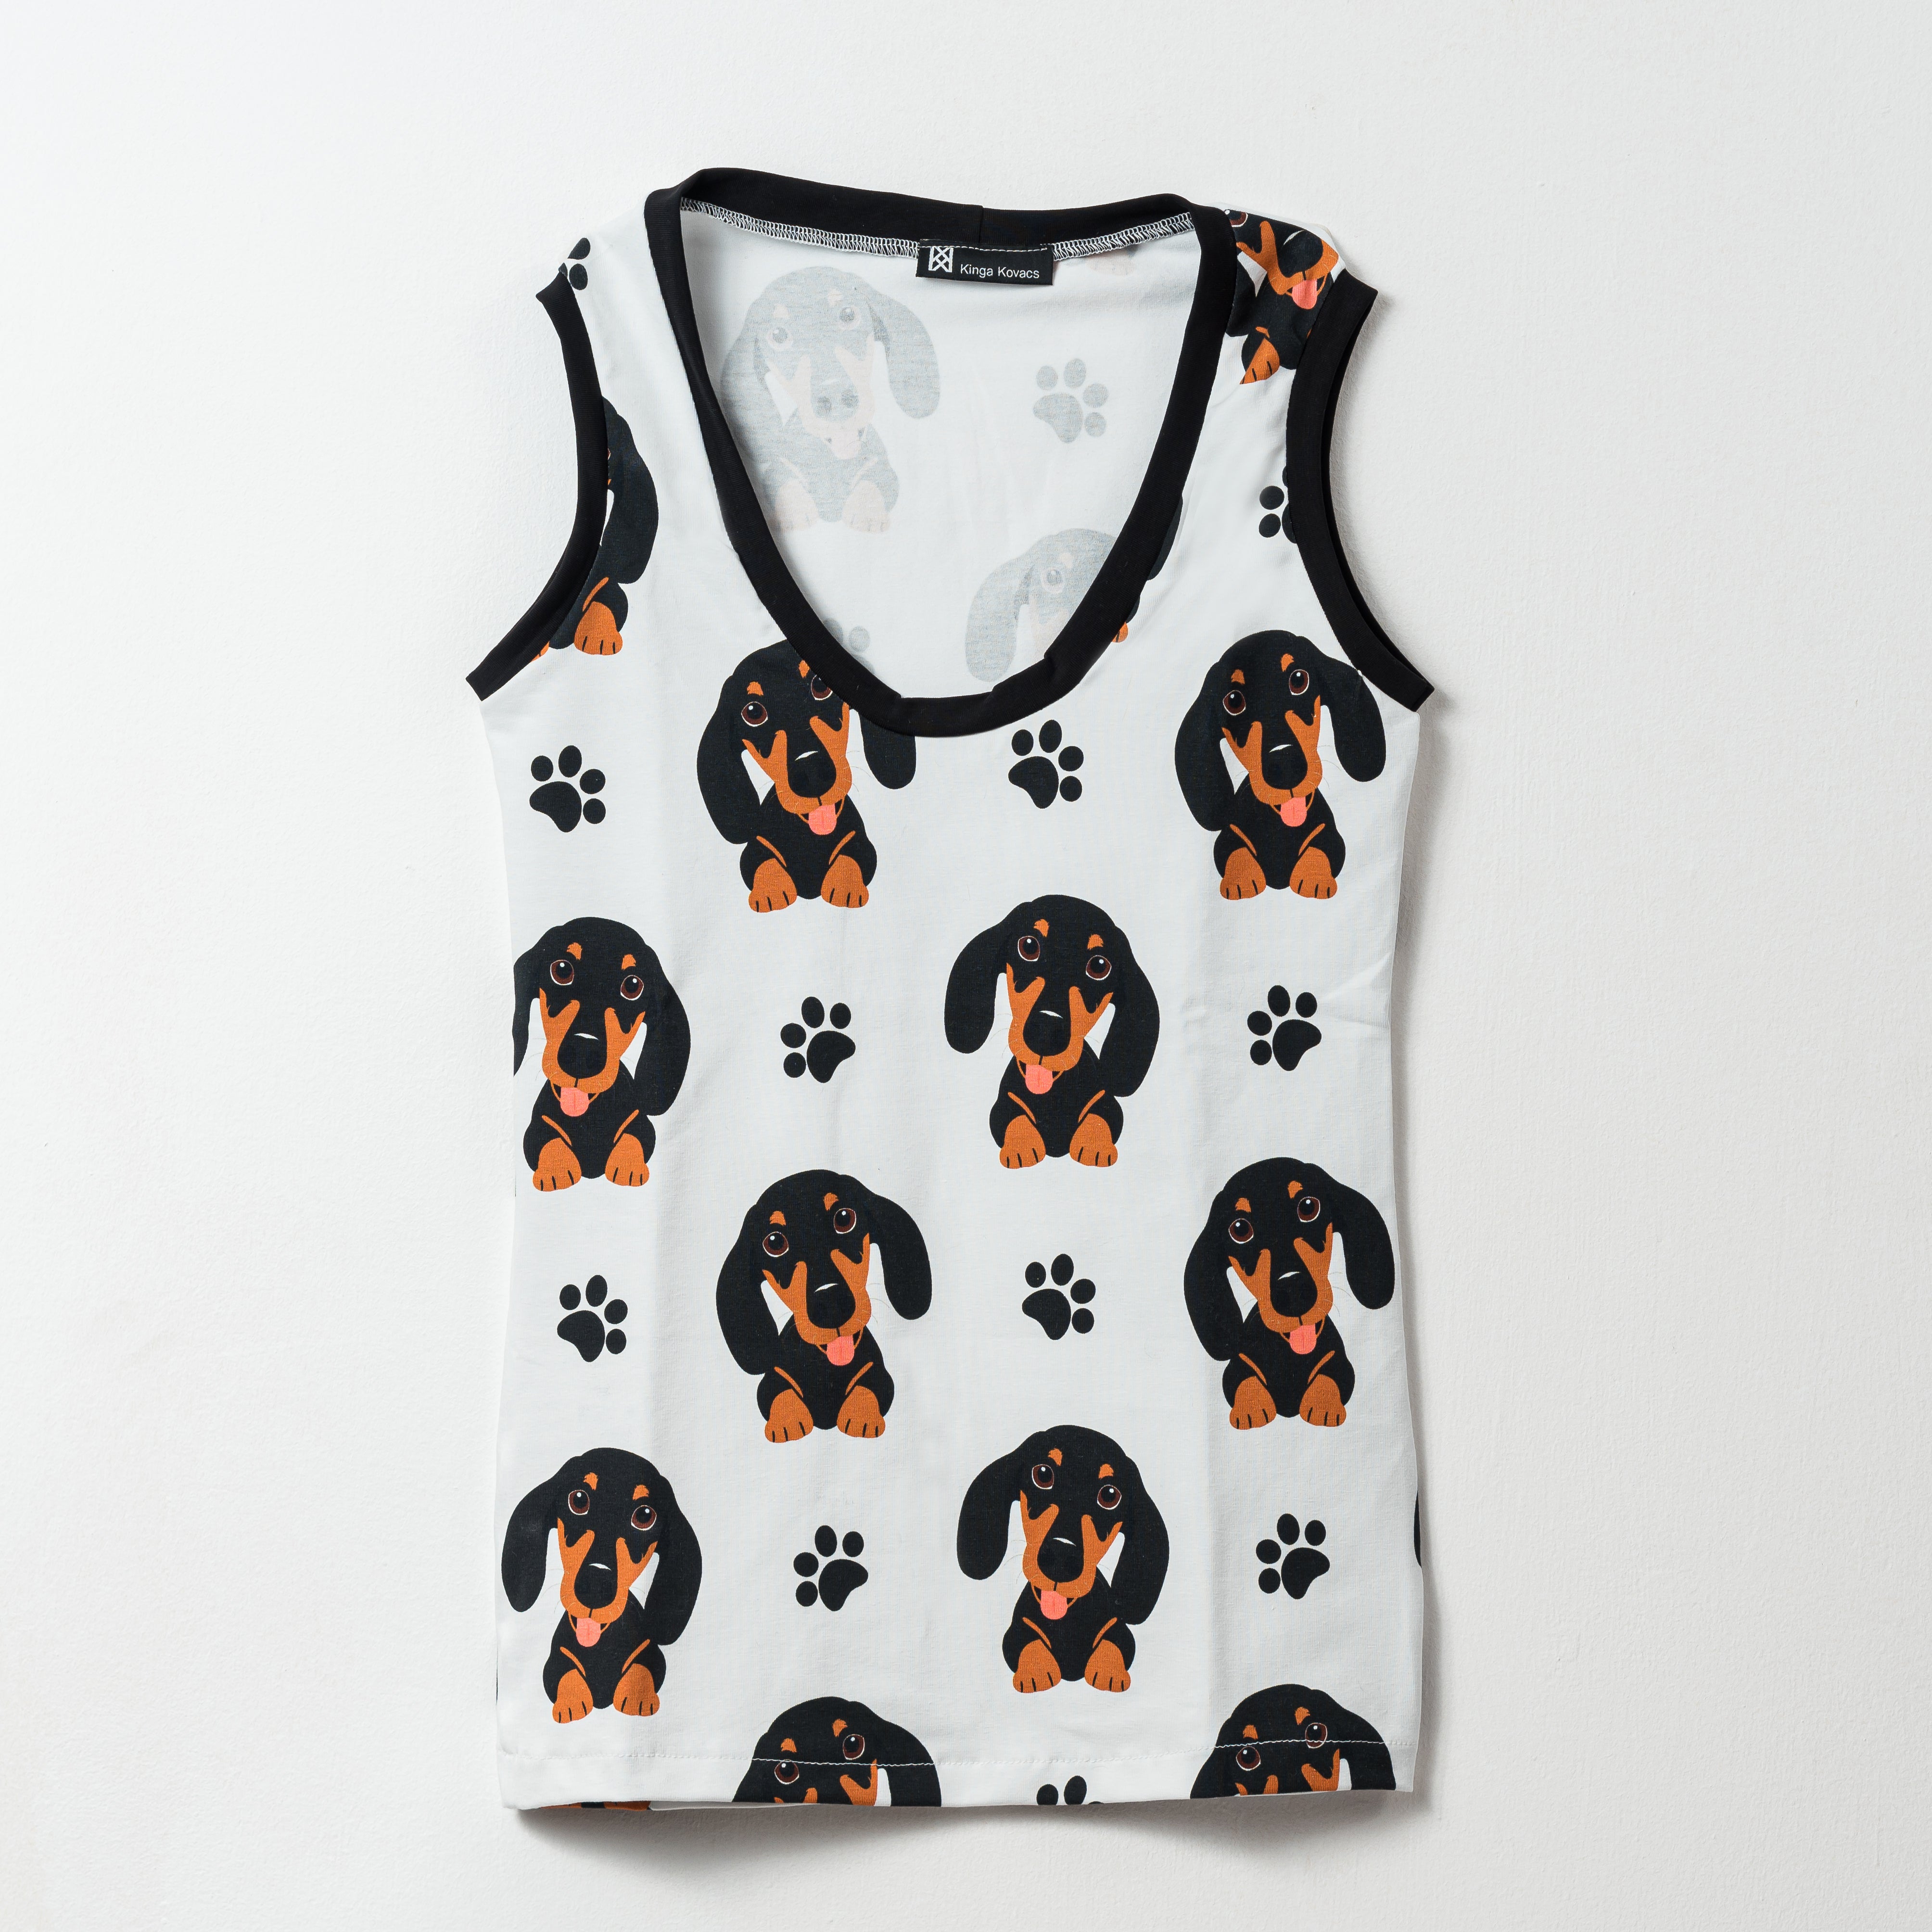 Sleevless t-shirt with dachshund print